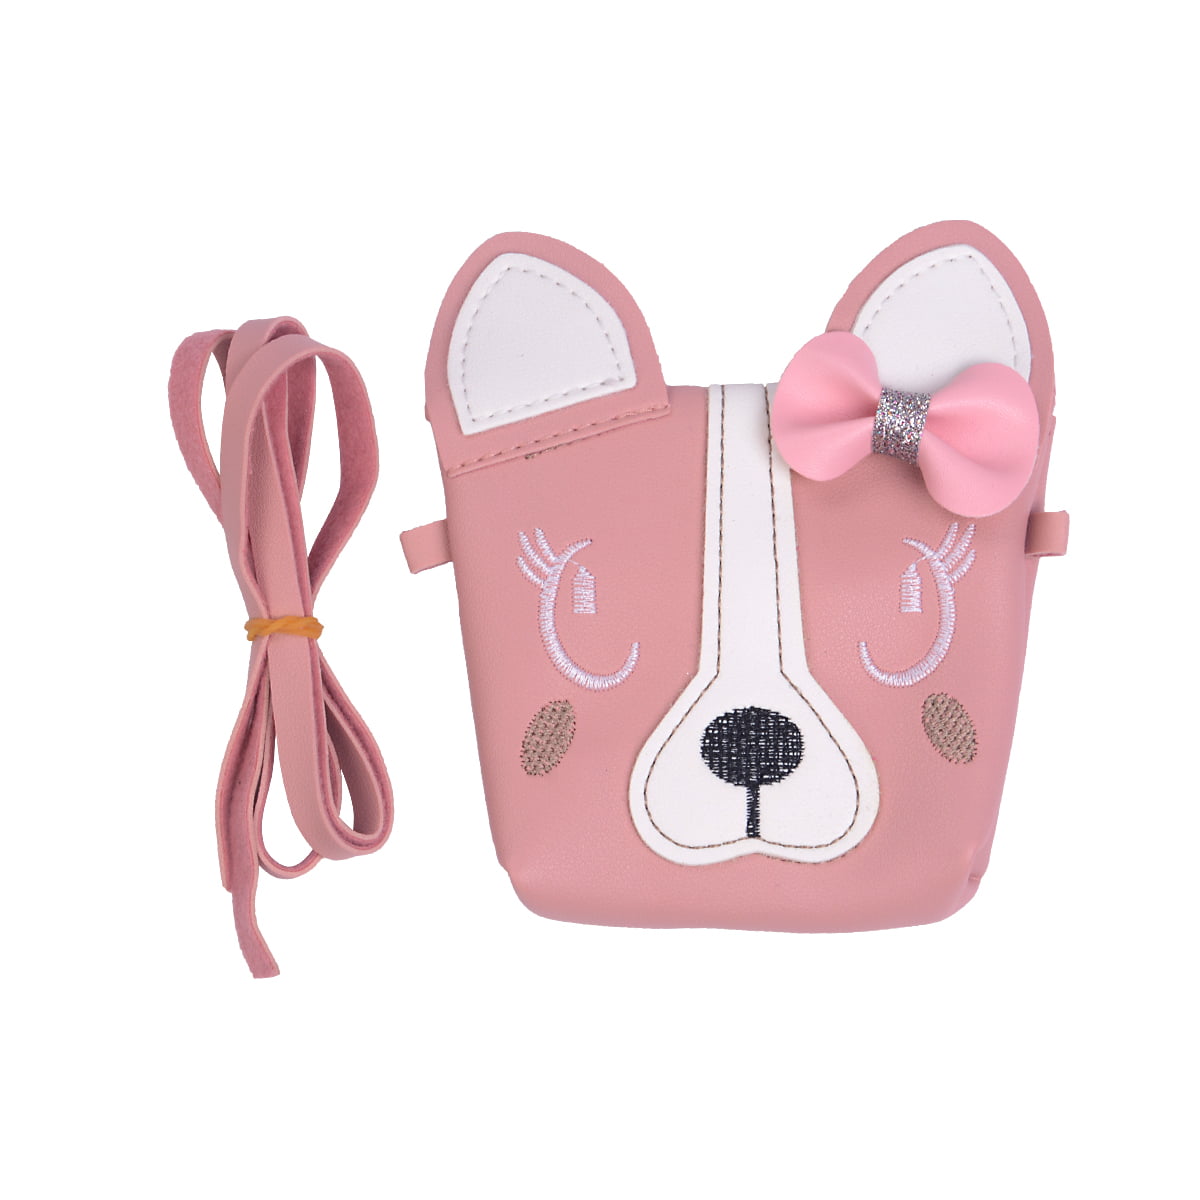 Soft Toy of Dog Cute Handbag for Girls, Kids Playtime Toys(PURPLE)